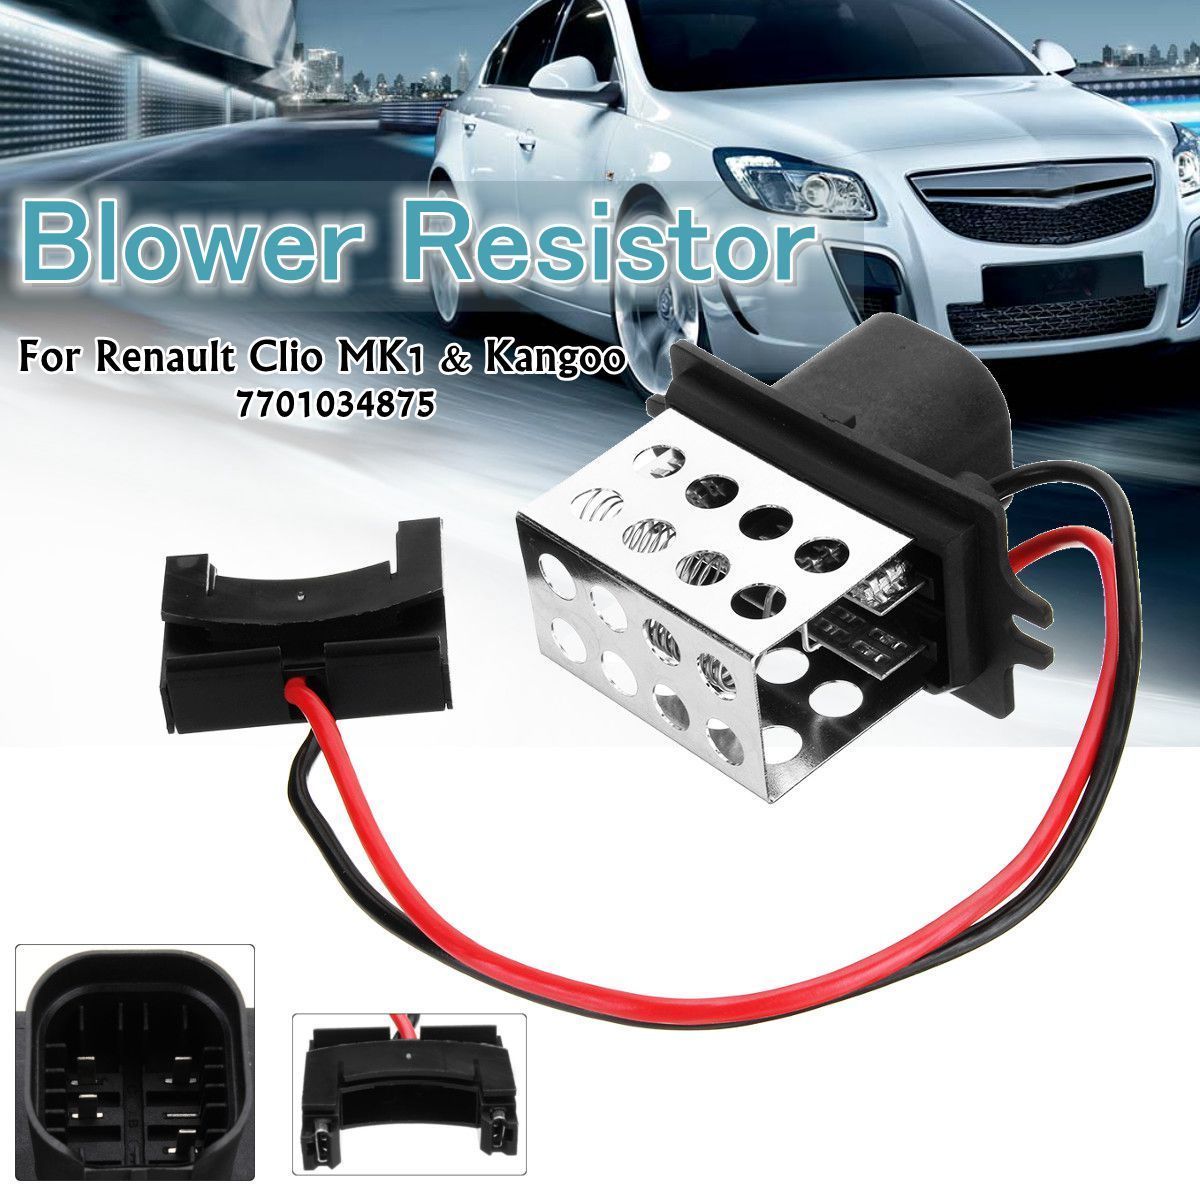 Car-Heater-Blower-Series-Resistor-for-Renault-Clio-MK1-Kangoo-1344658